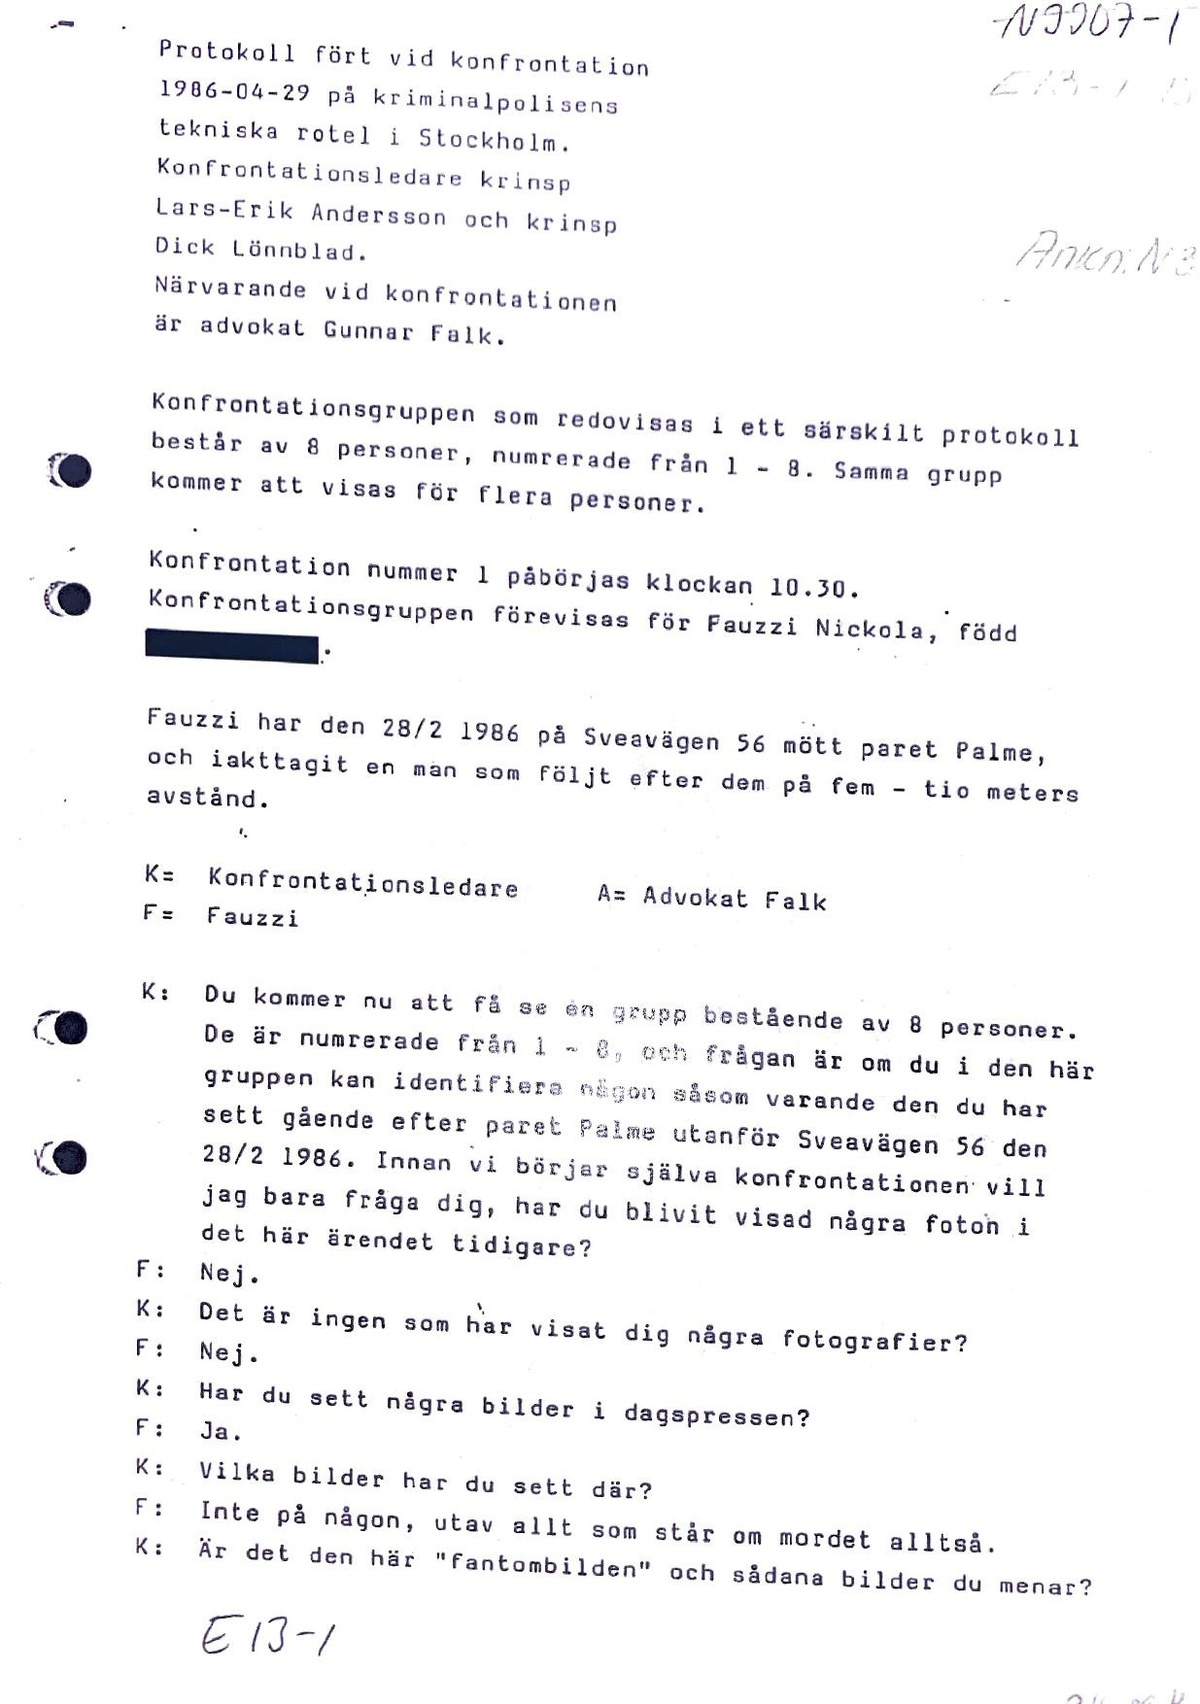 Pol-1986-04-29 E13-01-D konfrontation-Nicola-Fauzzi.pdf